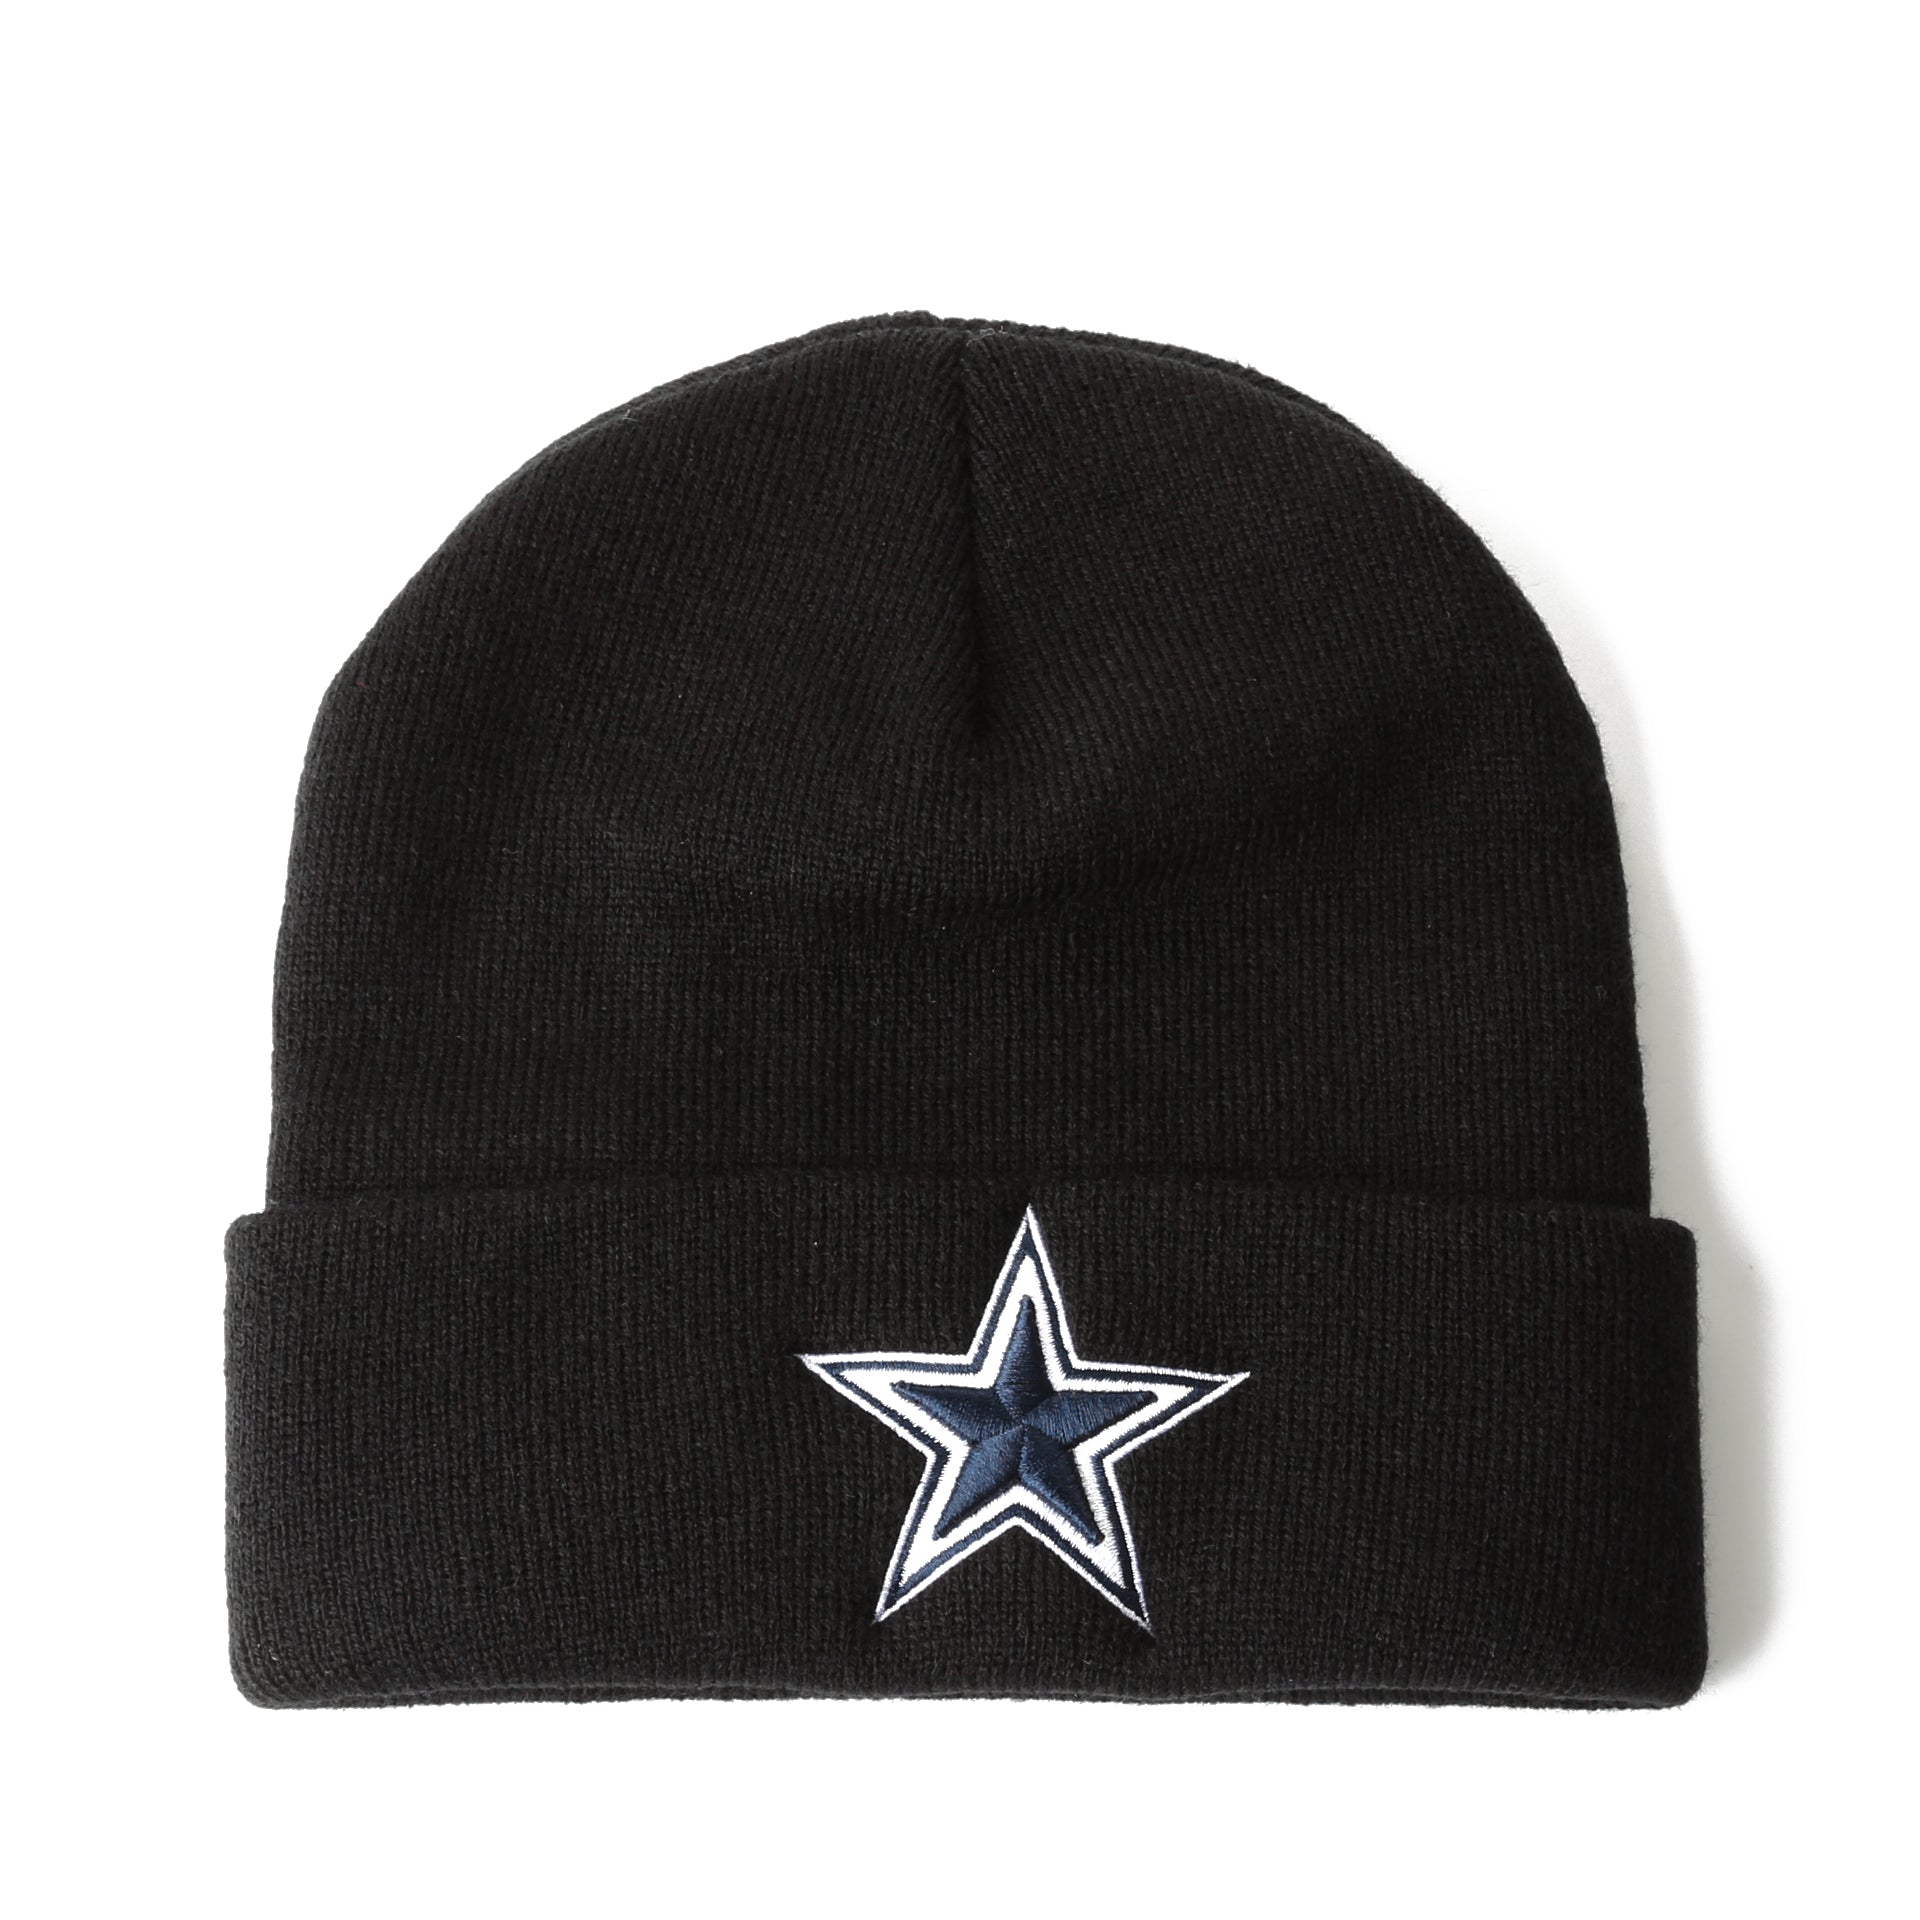 Dallas Cowboys Basic Knit Cap - Black - New Star